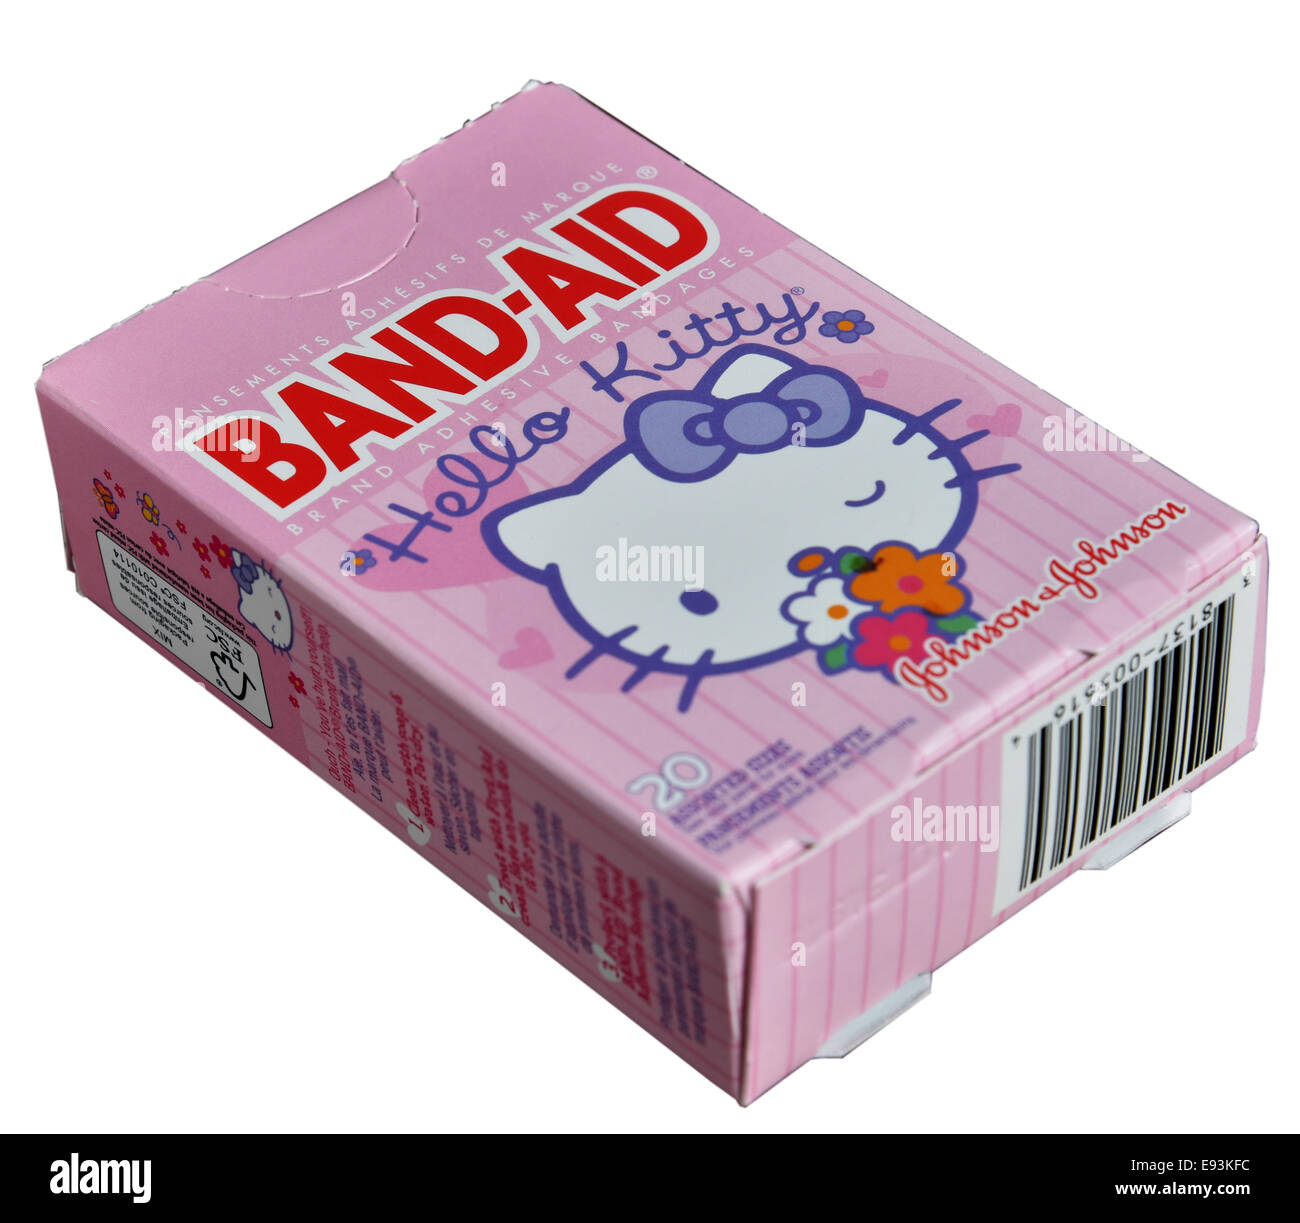 Hello Kitty Band Aid plasters Stock Photo